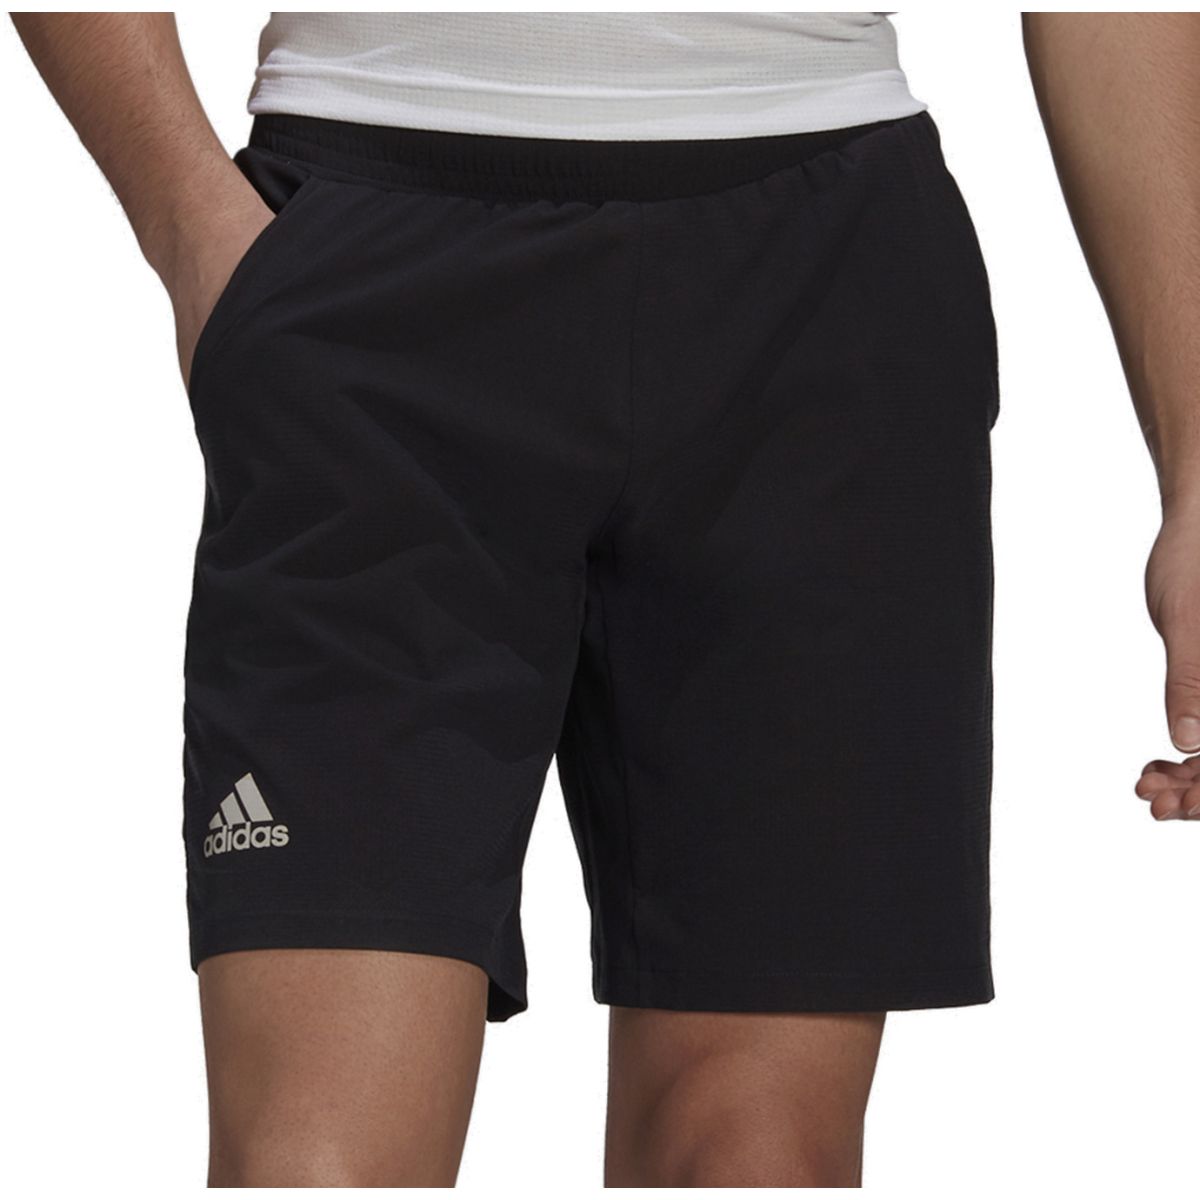 adidas Ergo 7" Men's Tennis Shorts GL5326-7